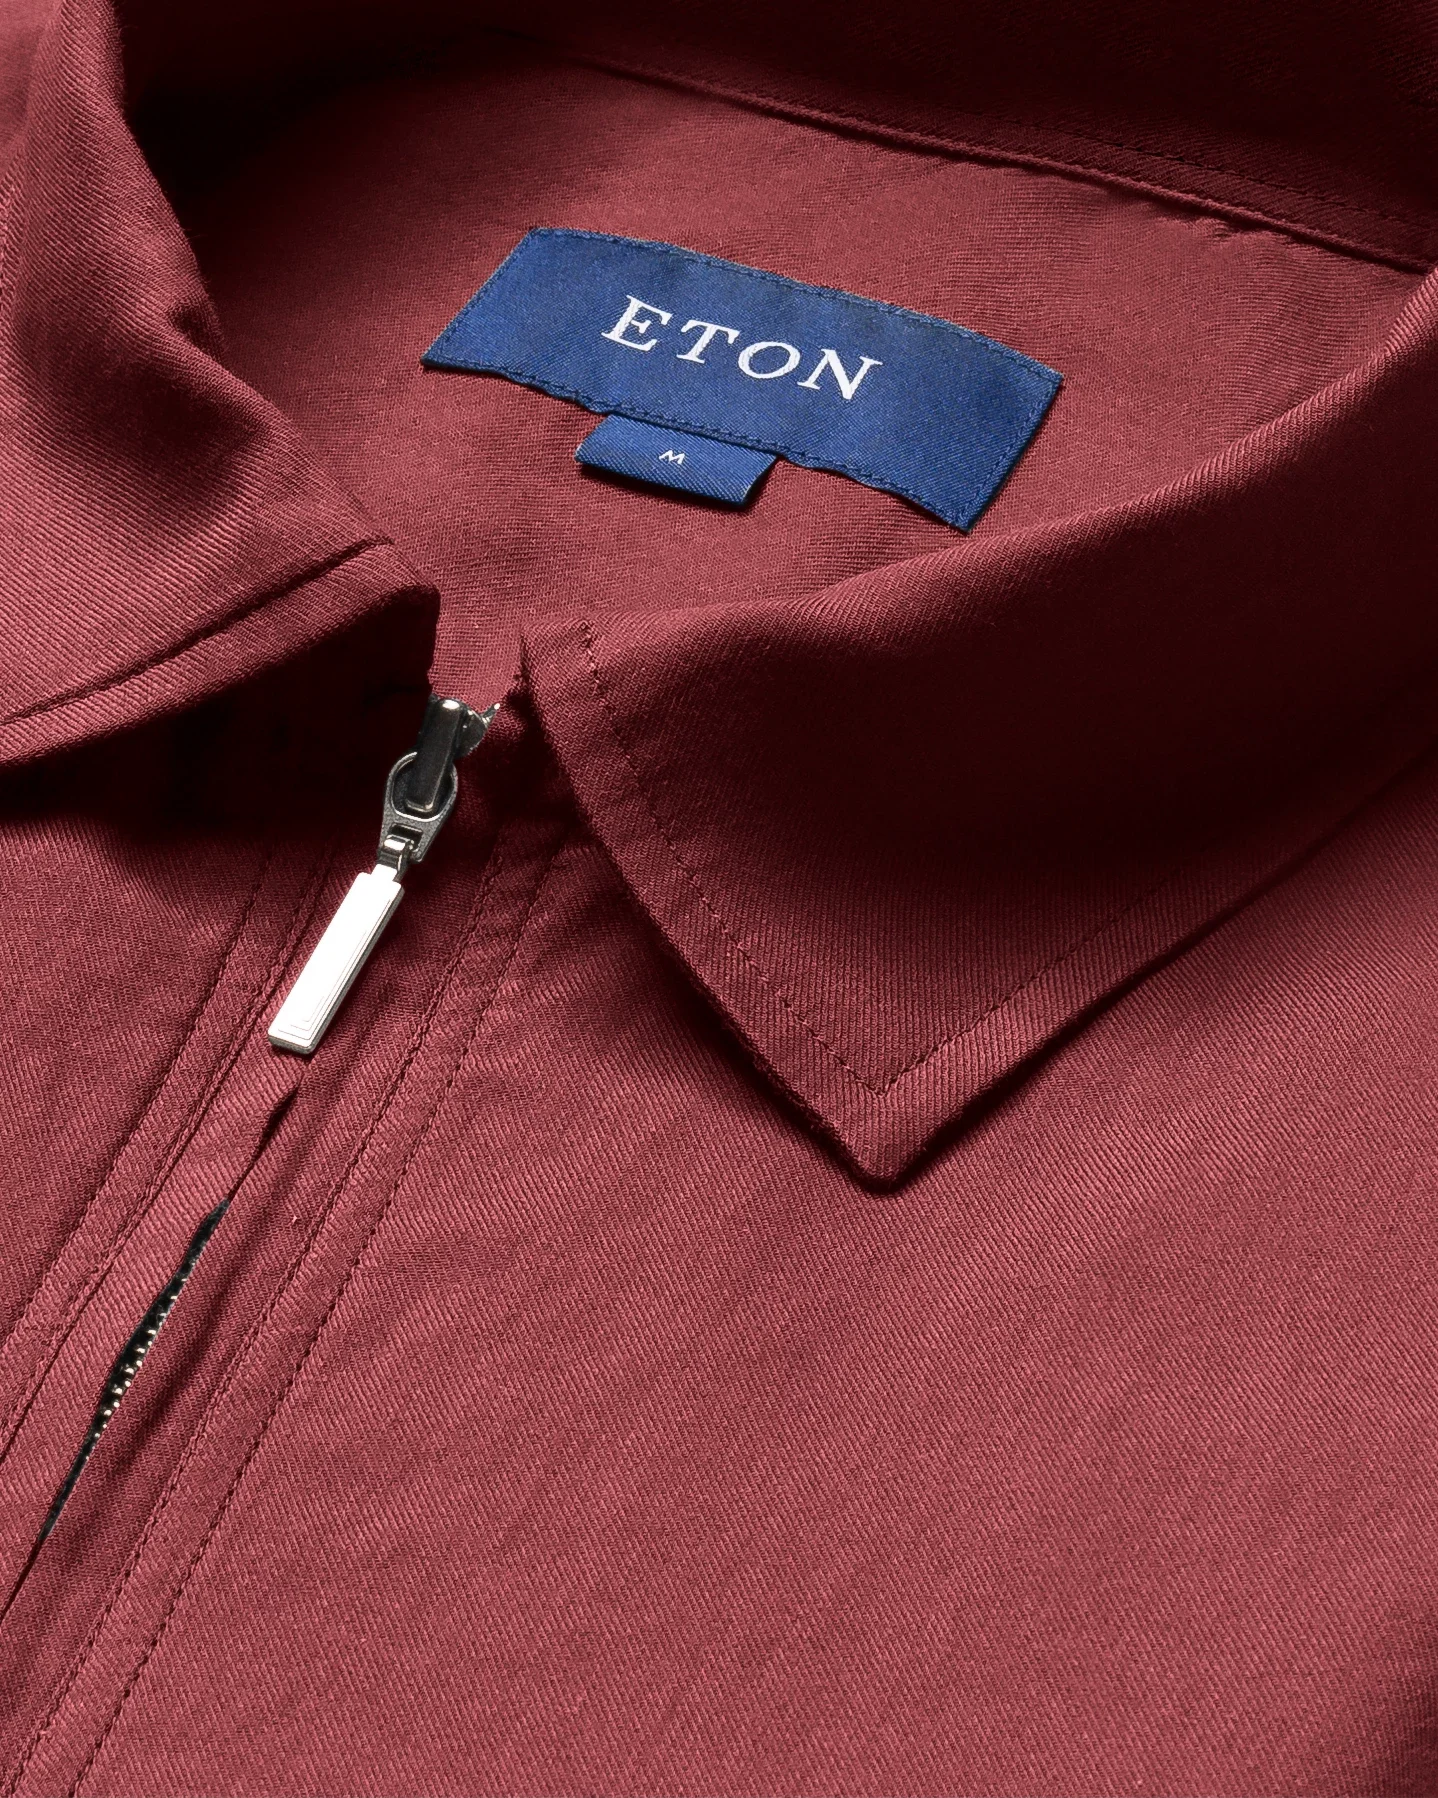 Eton - dusty red half zip shirt